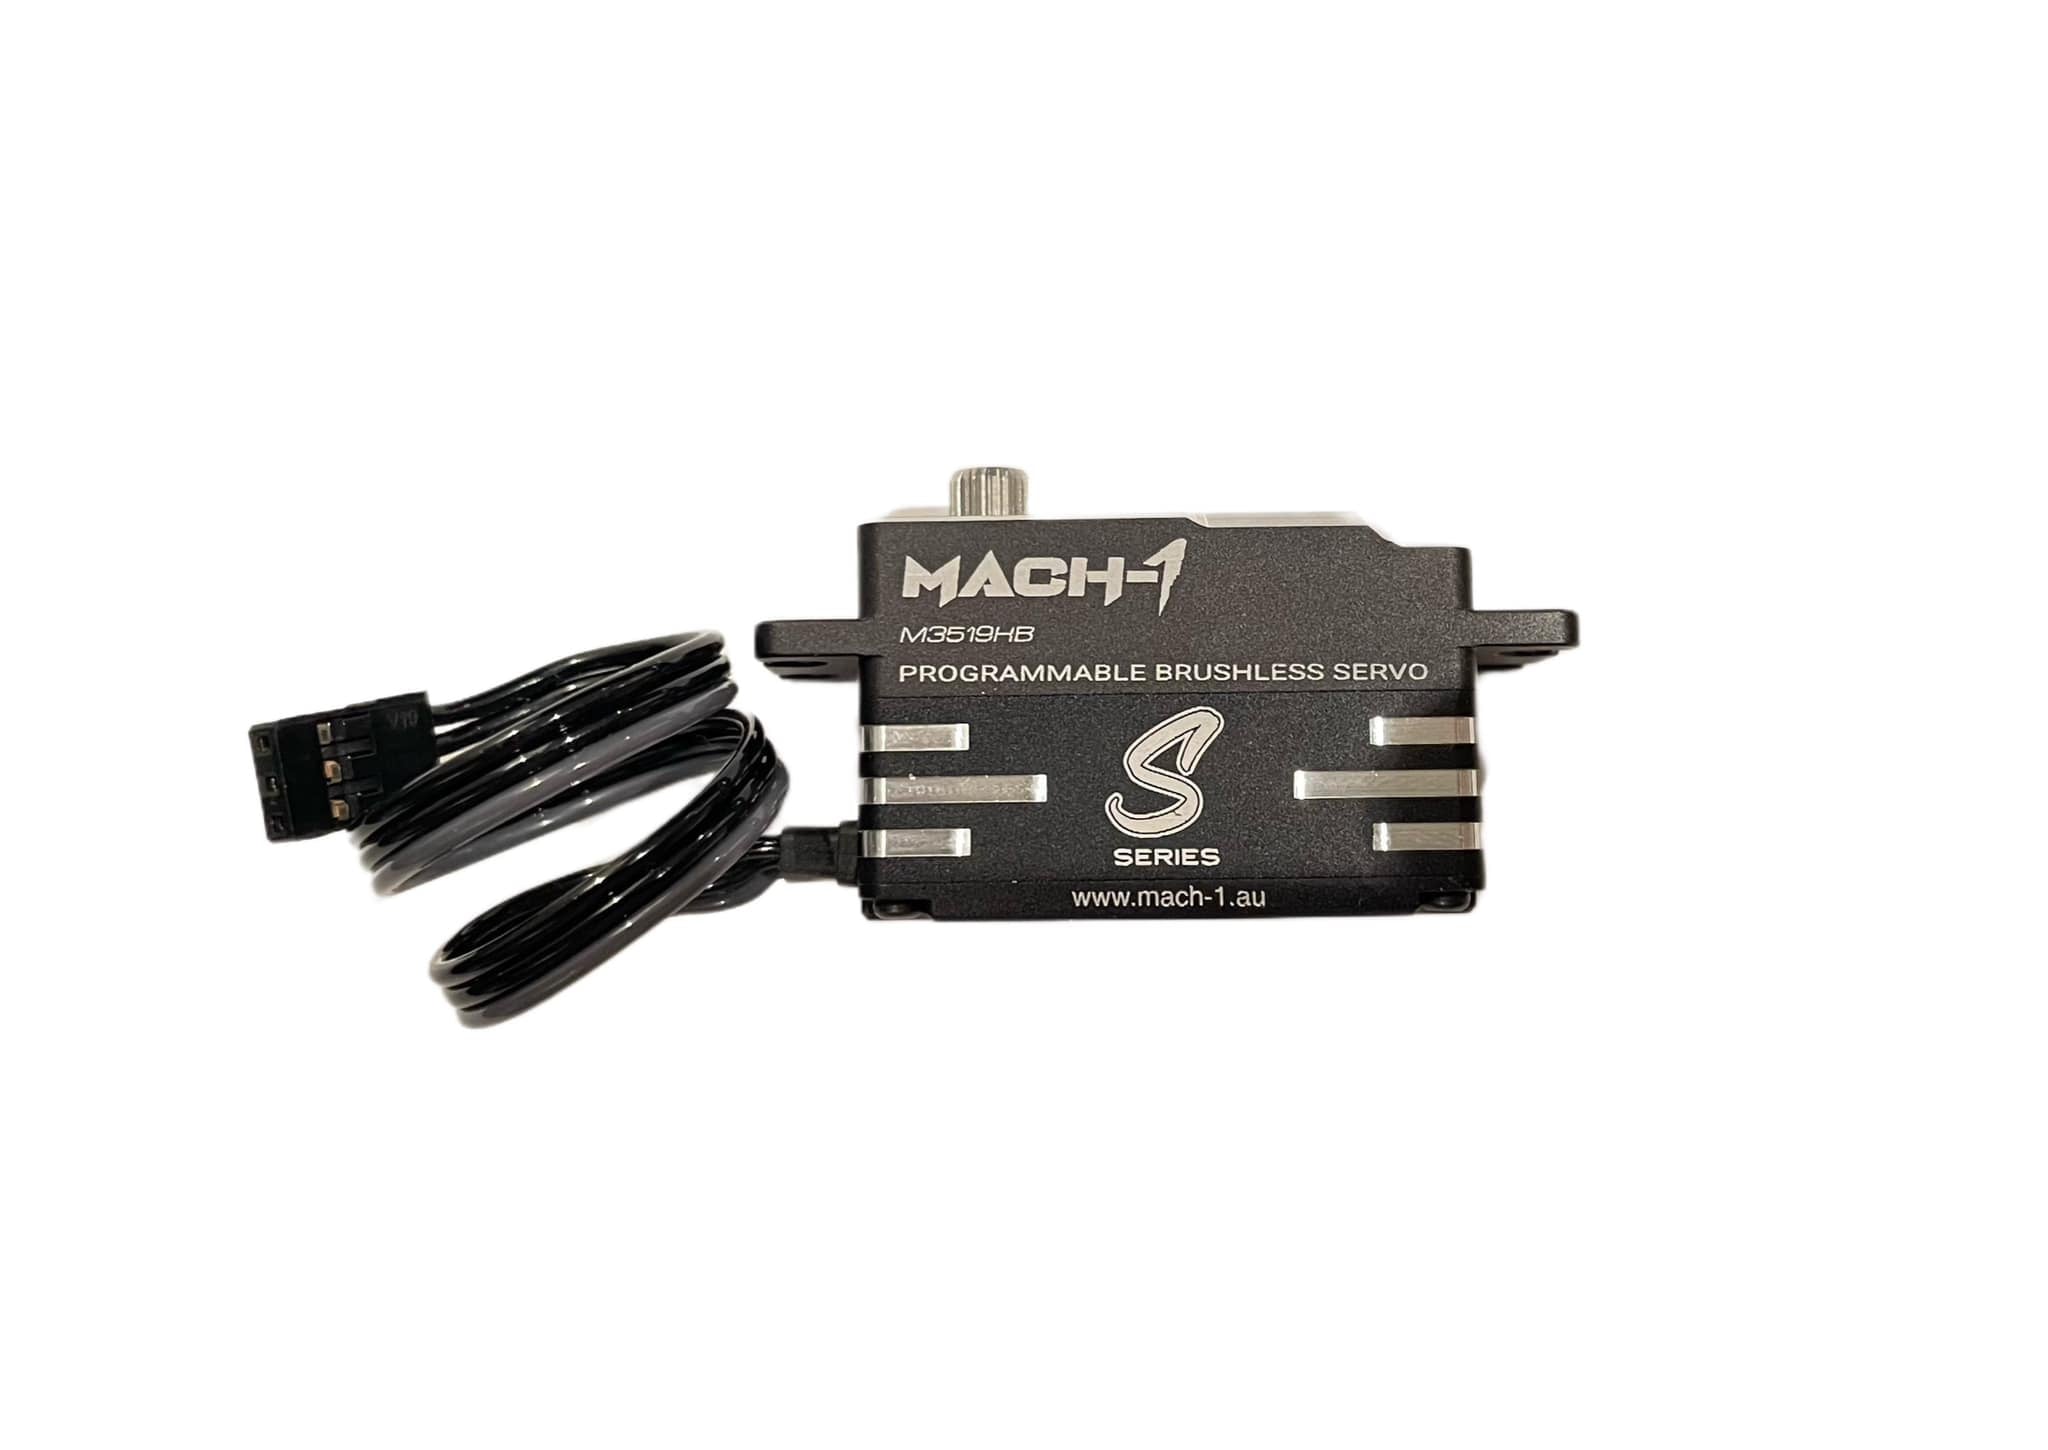 Mach-1 Racing M3519 ultra low profile 19.6KG programmable digital servo - [Sunshine-Coast] - Mach-1 - [RC-Car] - [Scale-Model]